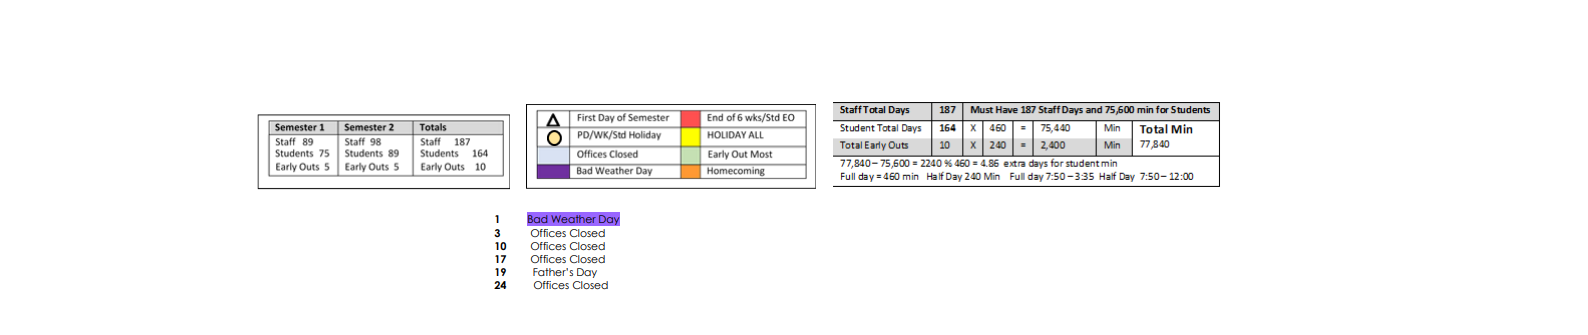 District School Academic Calendar Key for Jones Elementary